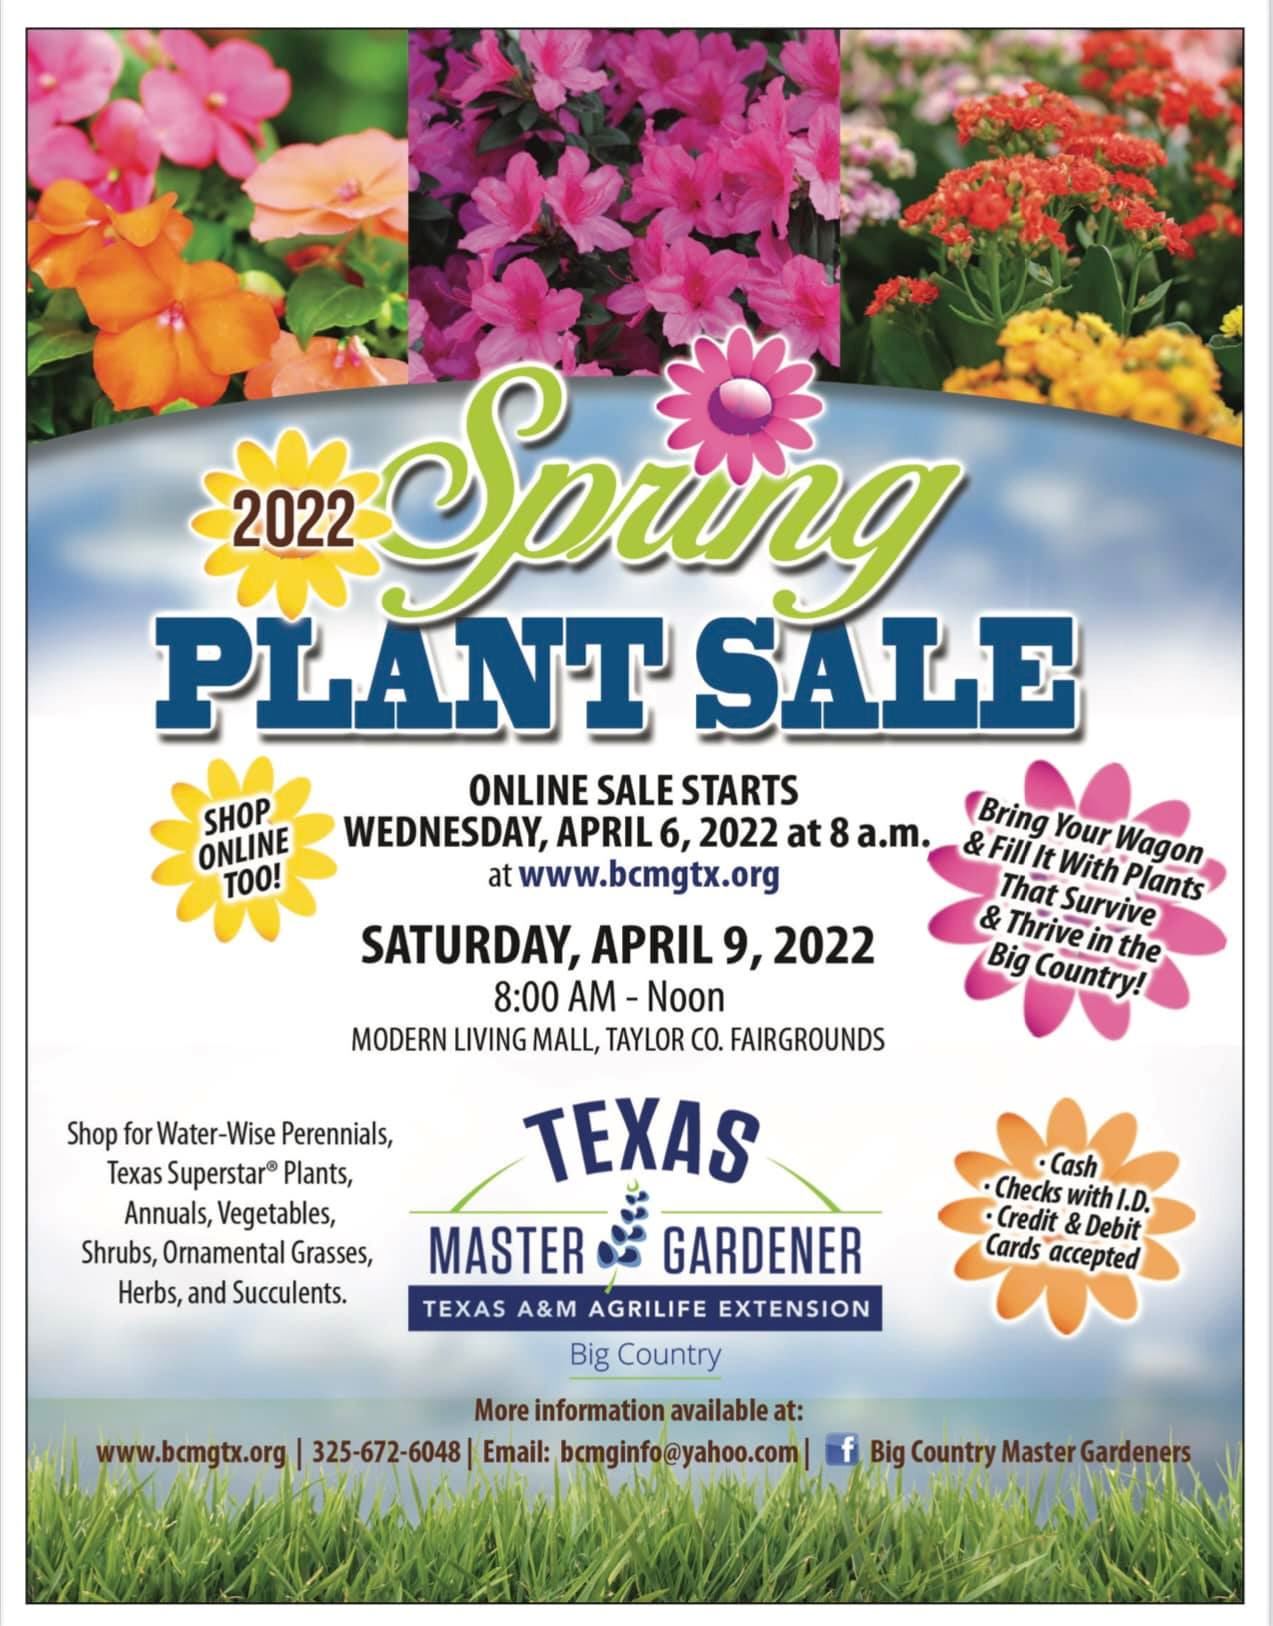 Big Country Master Gardener's Plant Sale